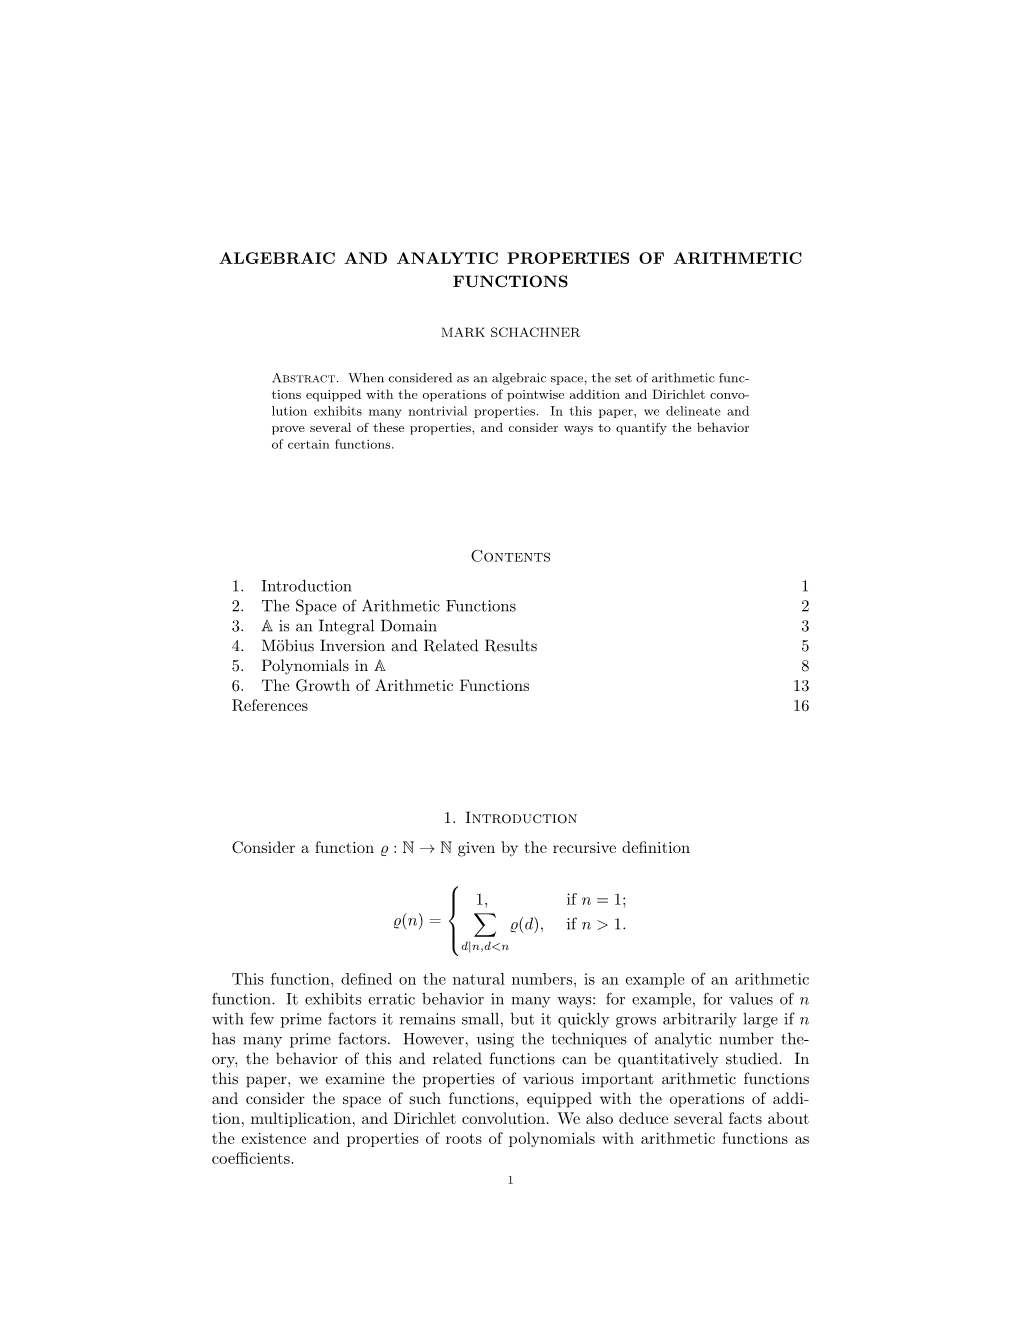 Algebraic and Analytic Properties of Arithmetic Functions